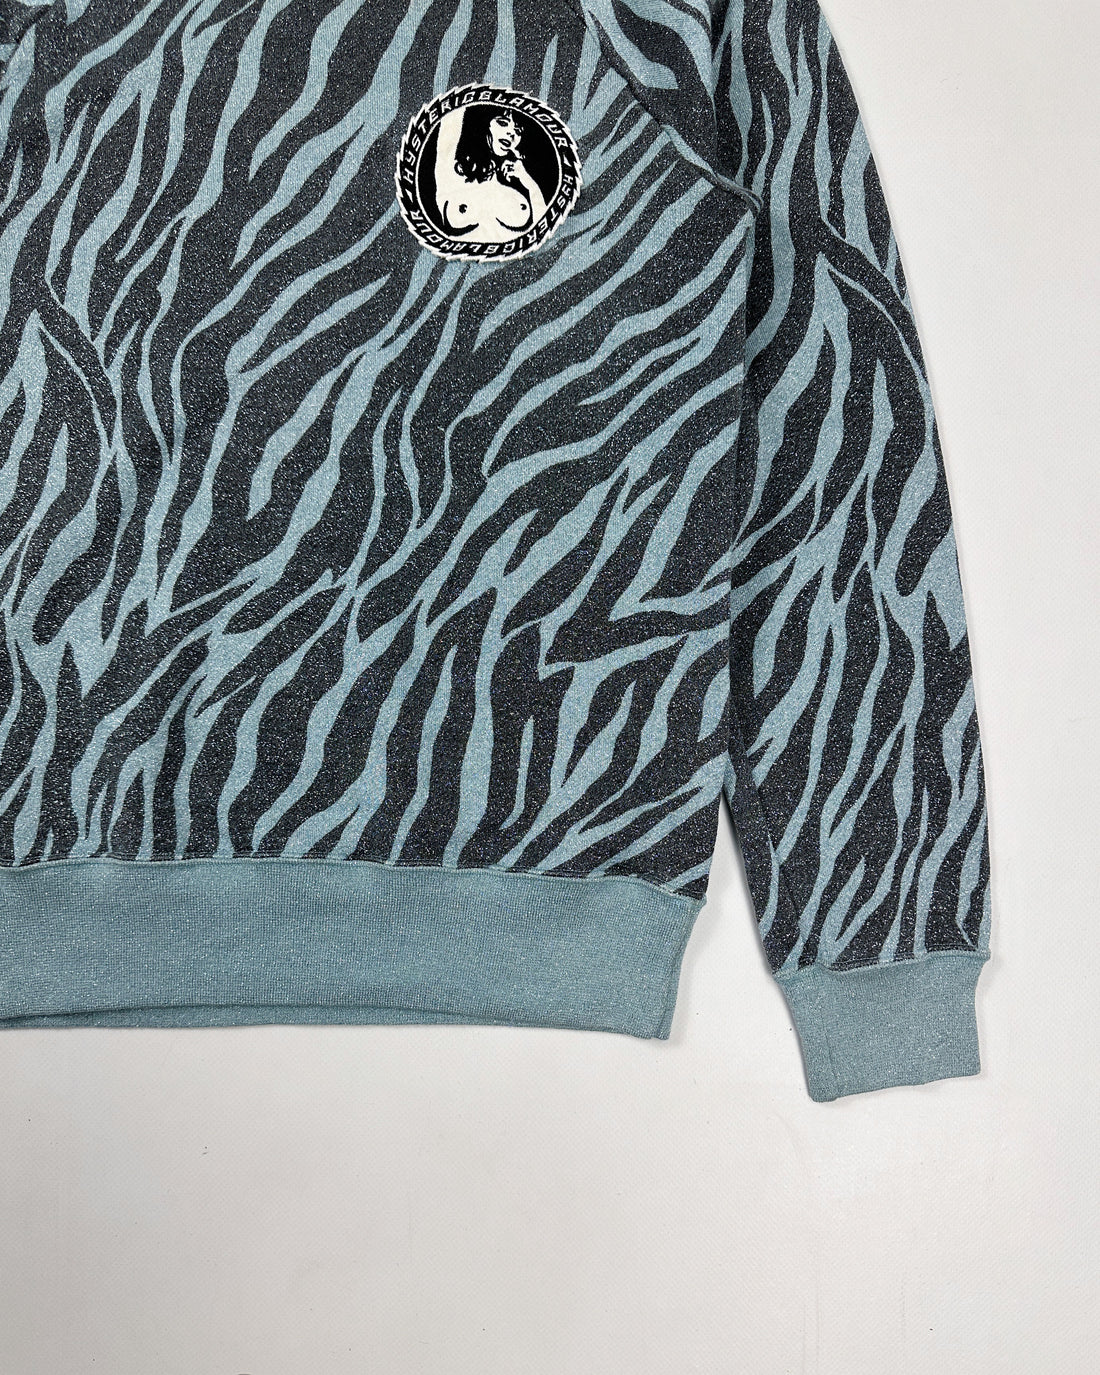 Hysteric Glamour Shiny Blue Zebra Sweatshirt 2000's